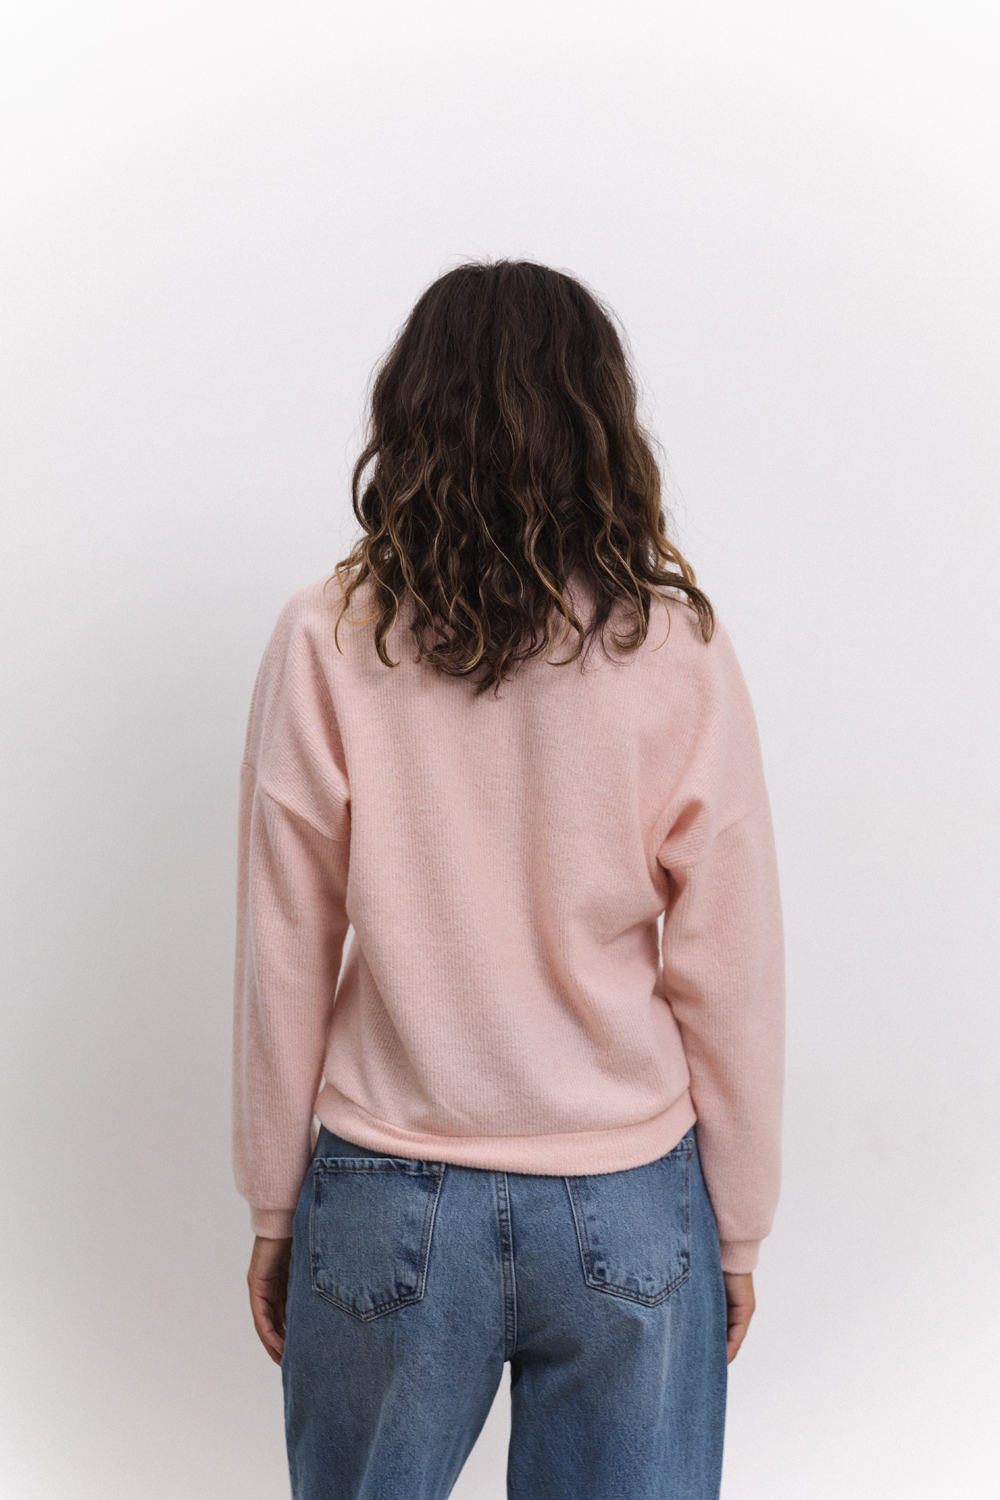 Peach sweatshirt in soft angora knit